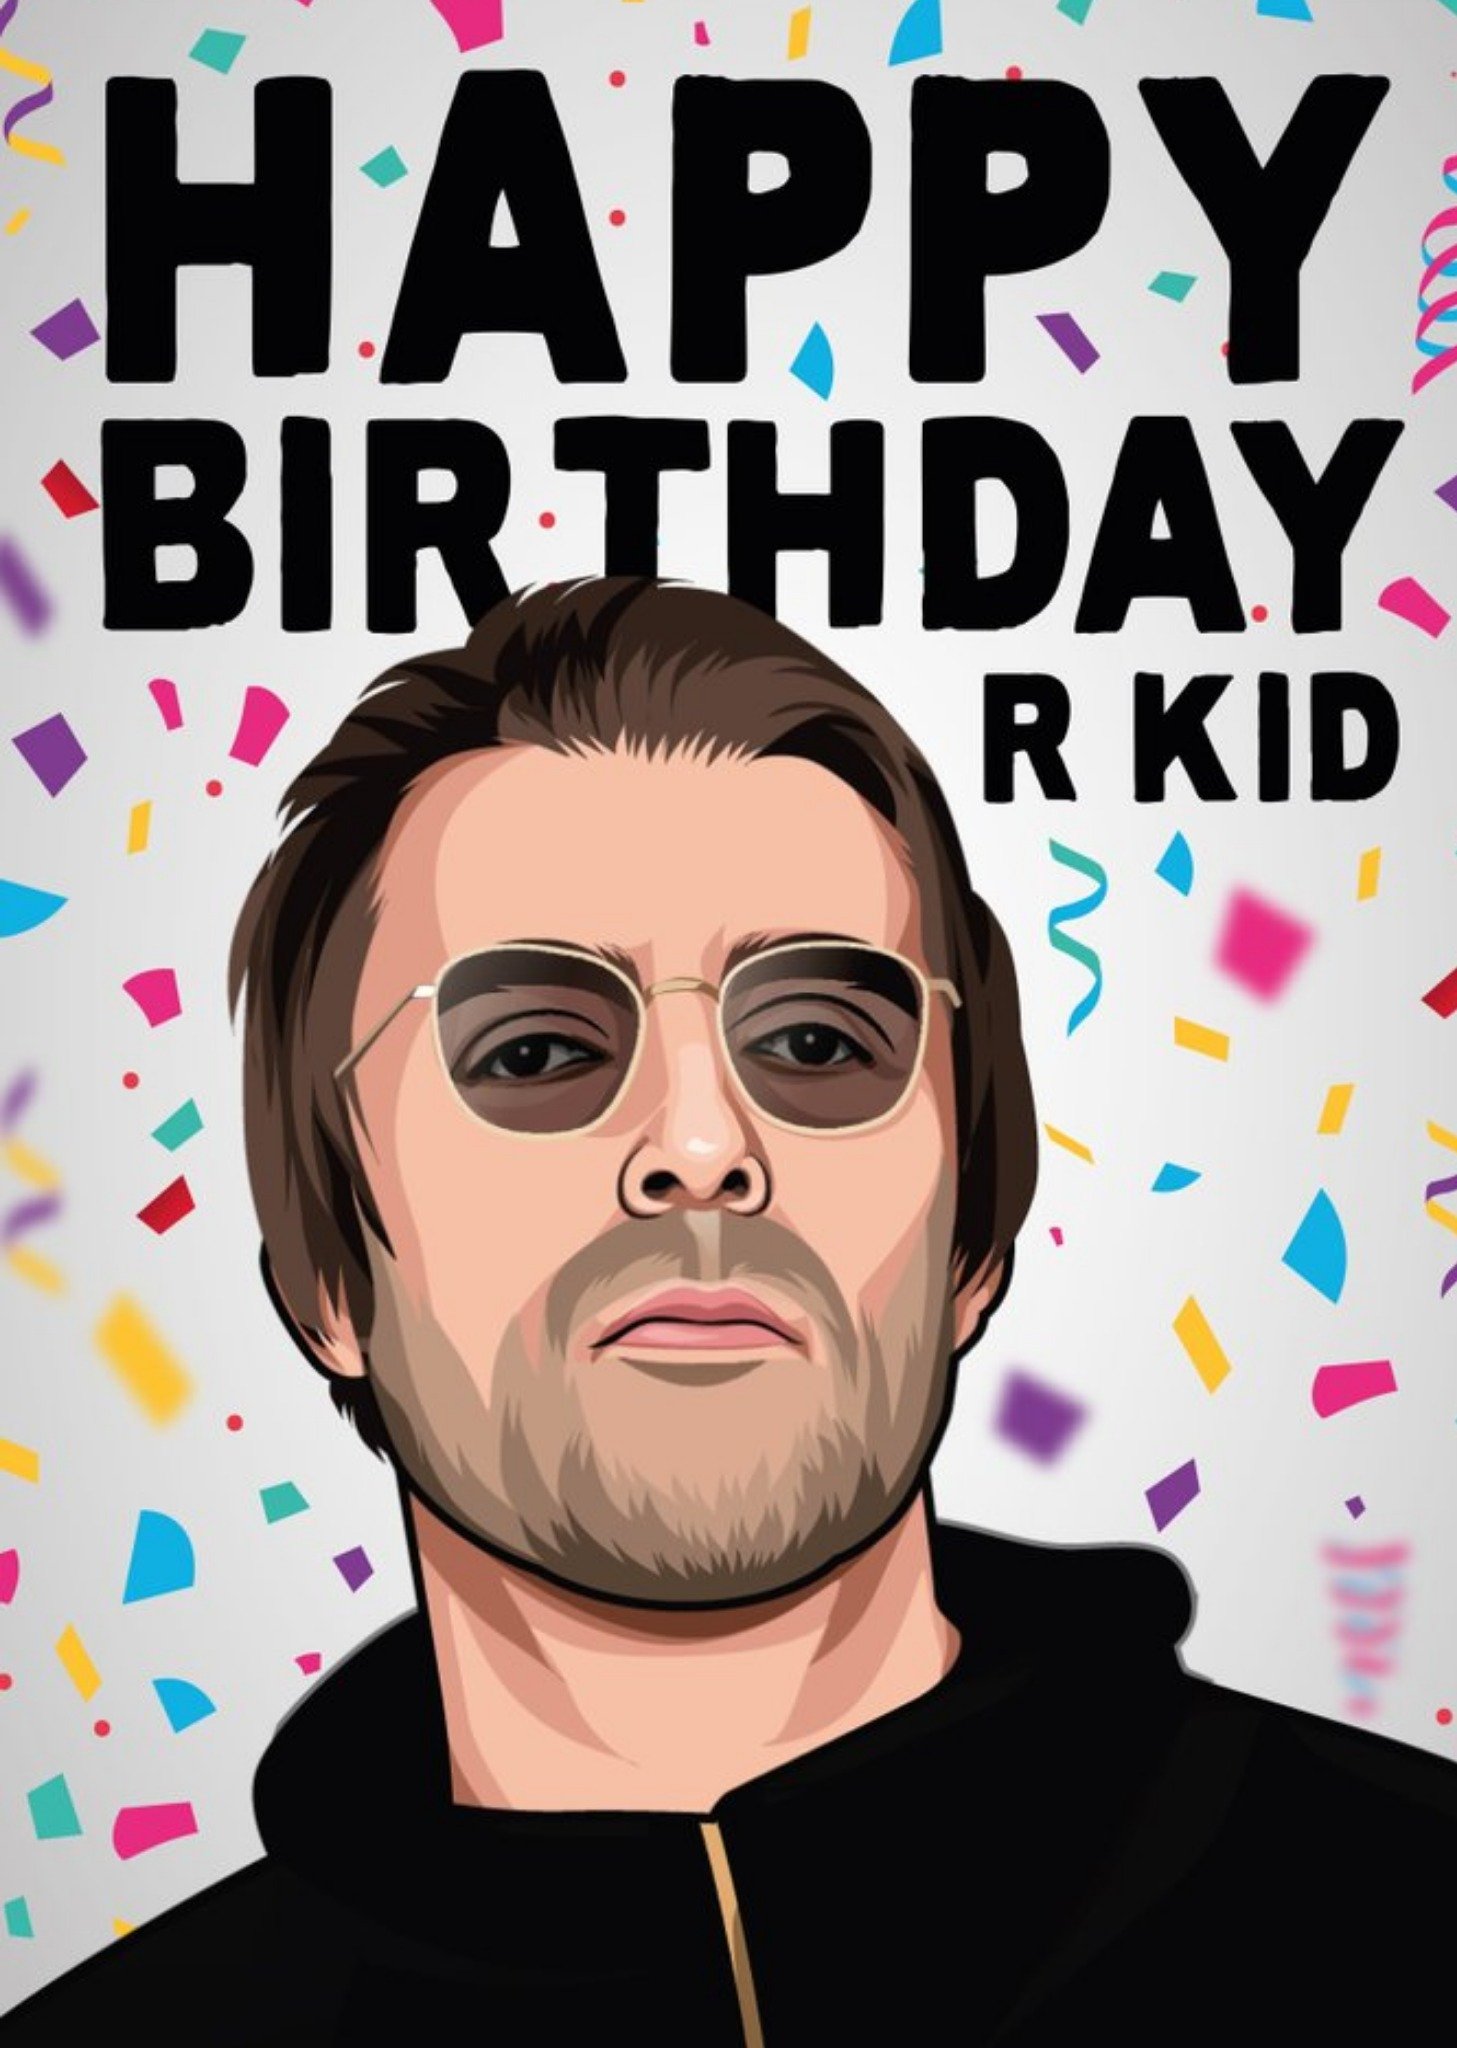 All Things Banter Happy Birthday R Kid Music Card Ecard